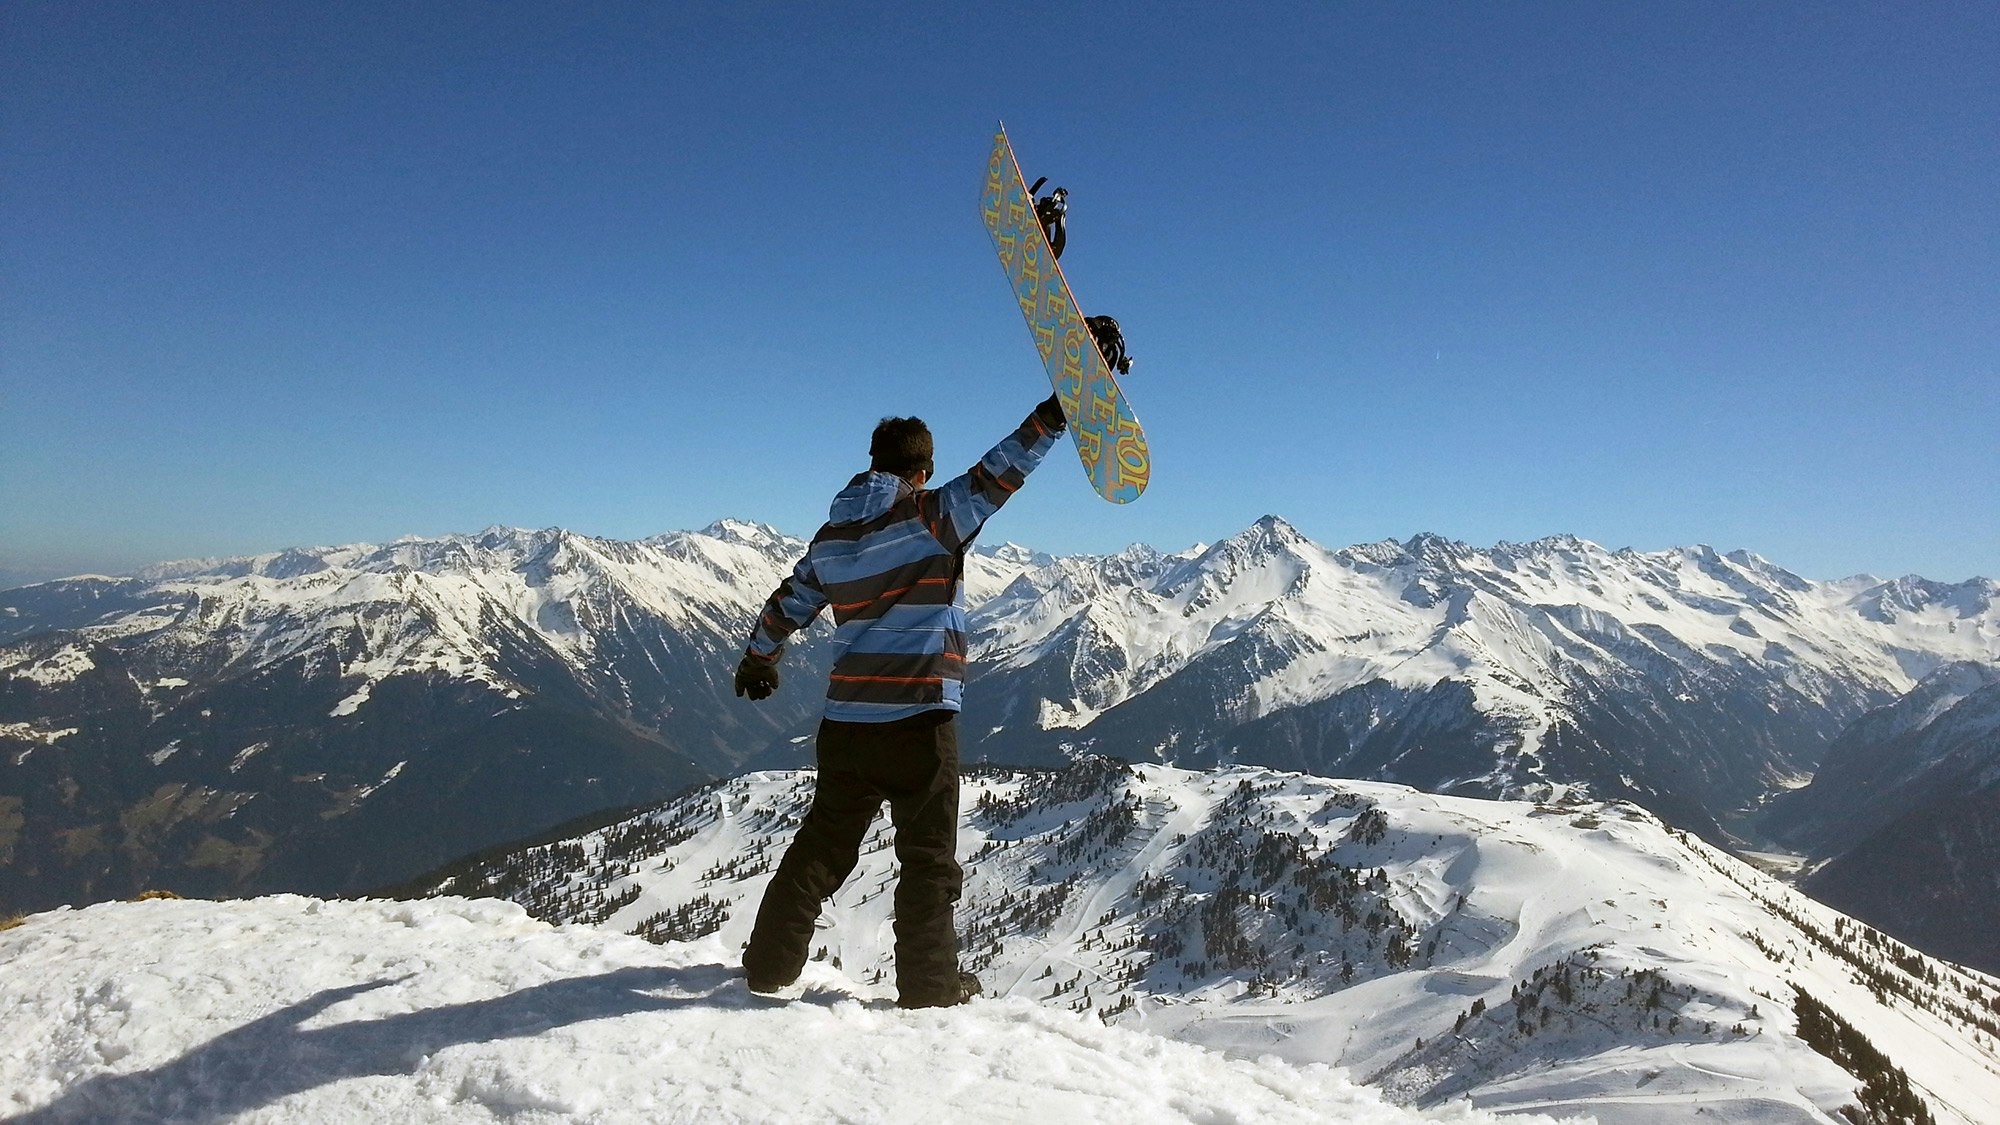 Man with snowboard on a mountain peak.